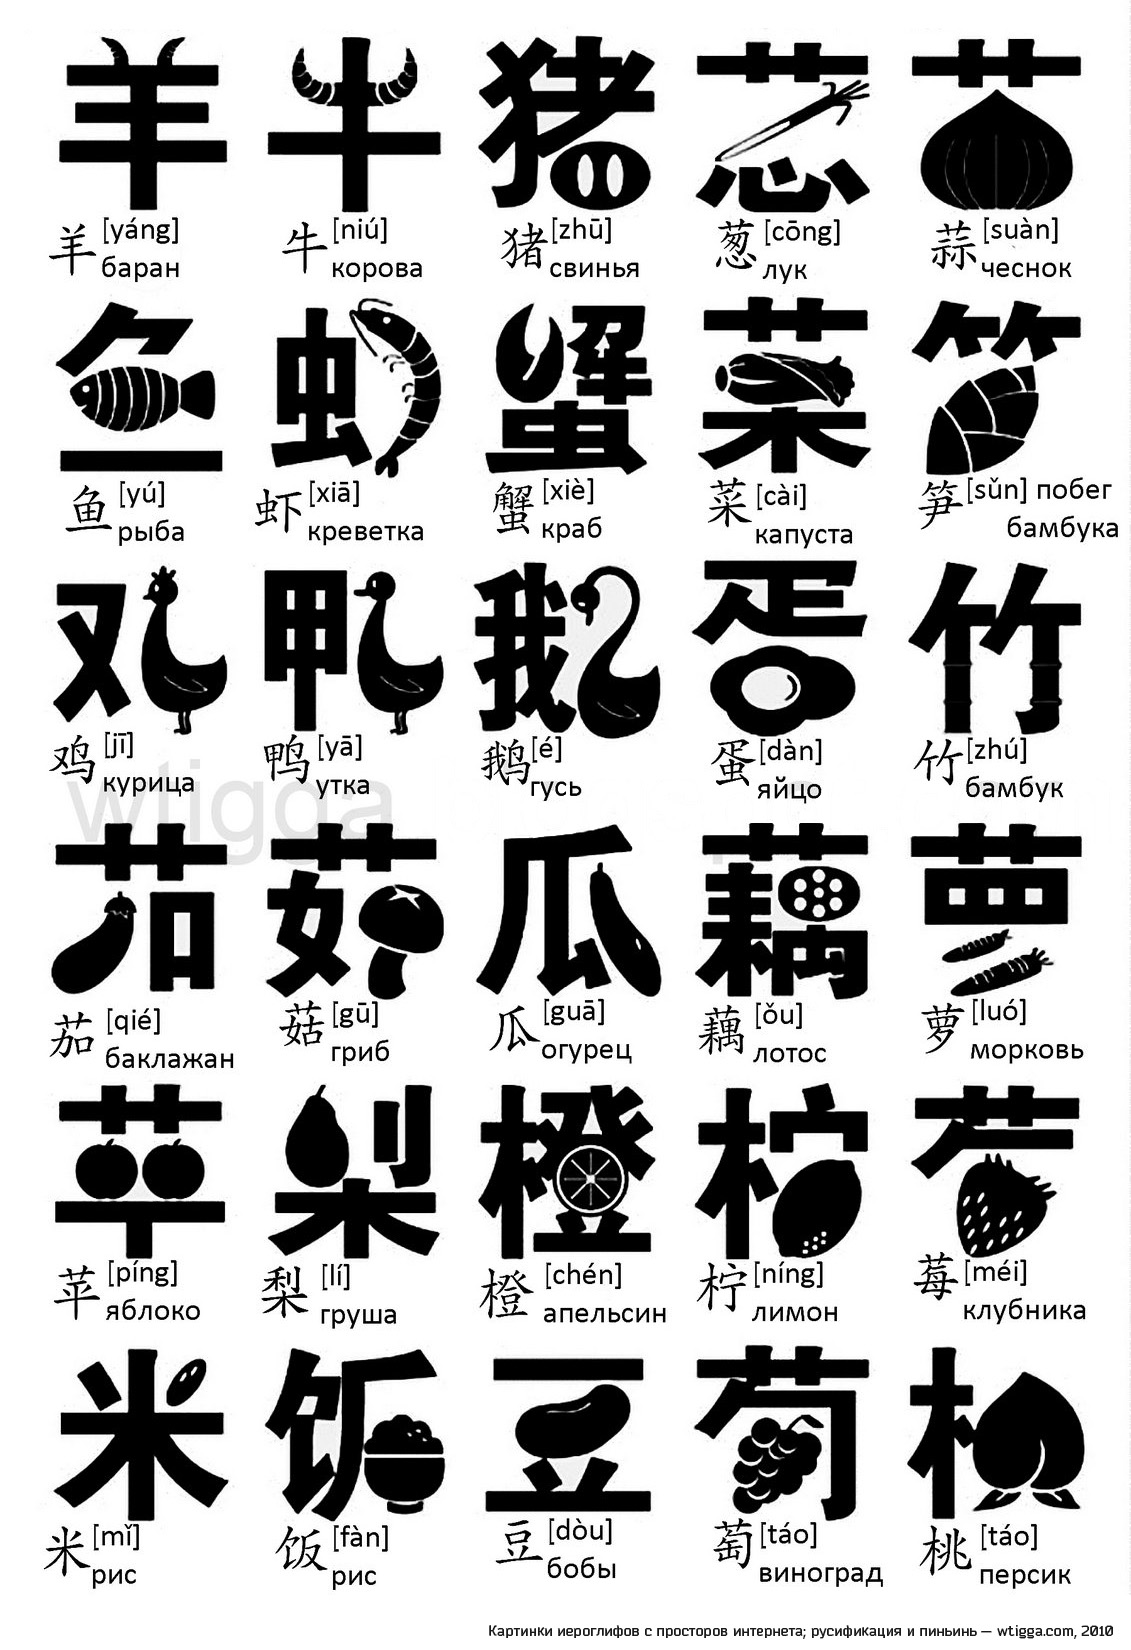 перевод японских иероглифов на русский по фото